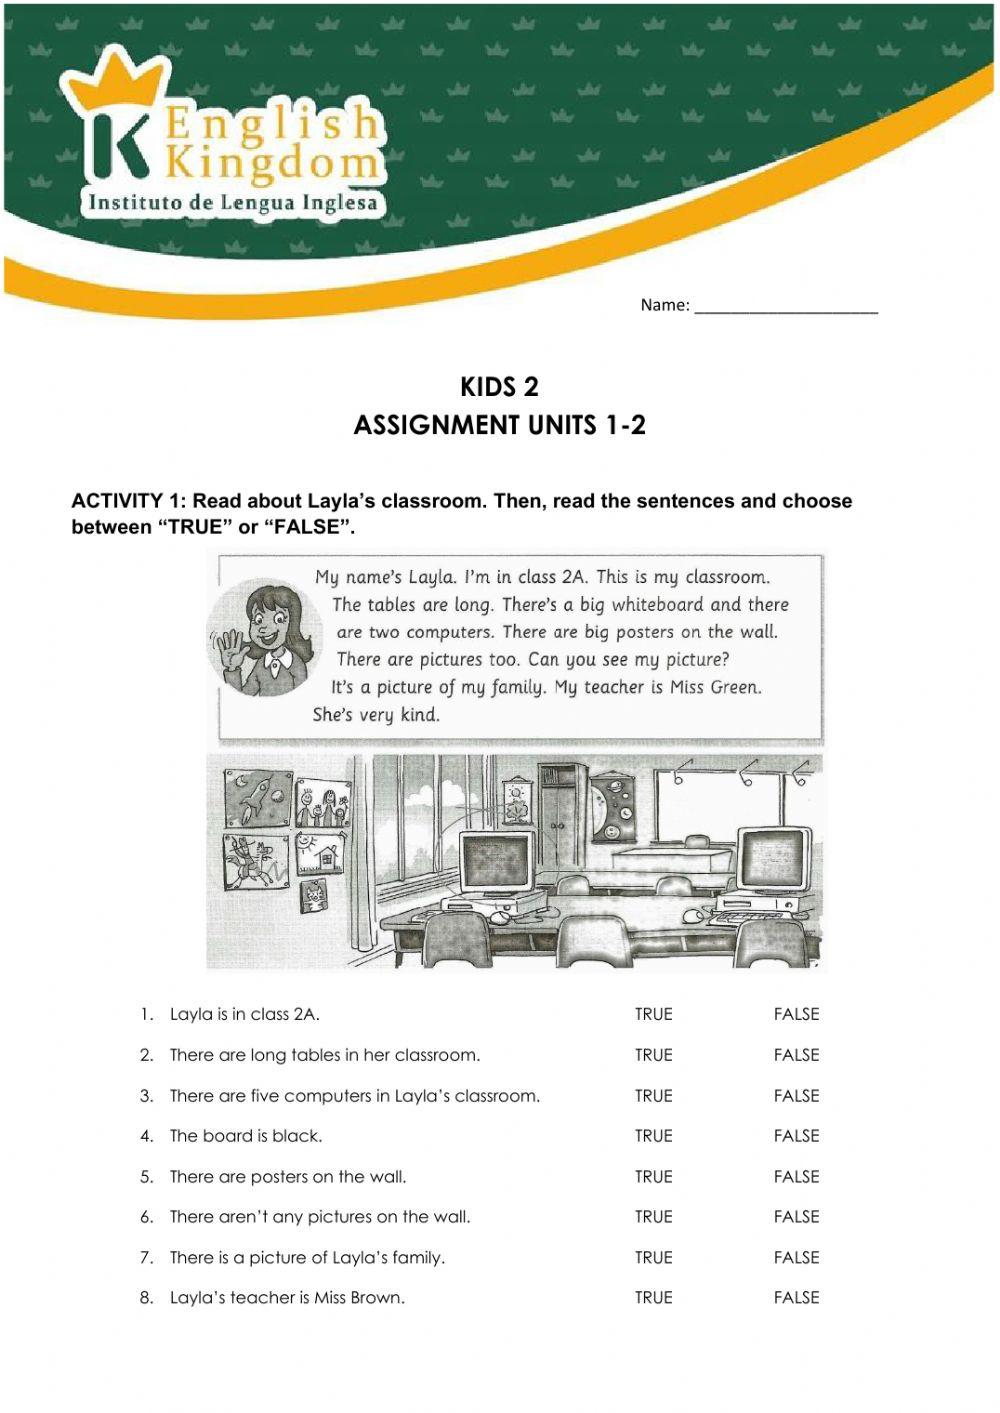 Kids 2 -Assessment Units 1-2